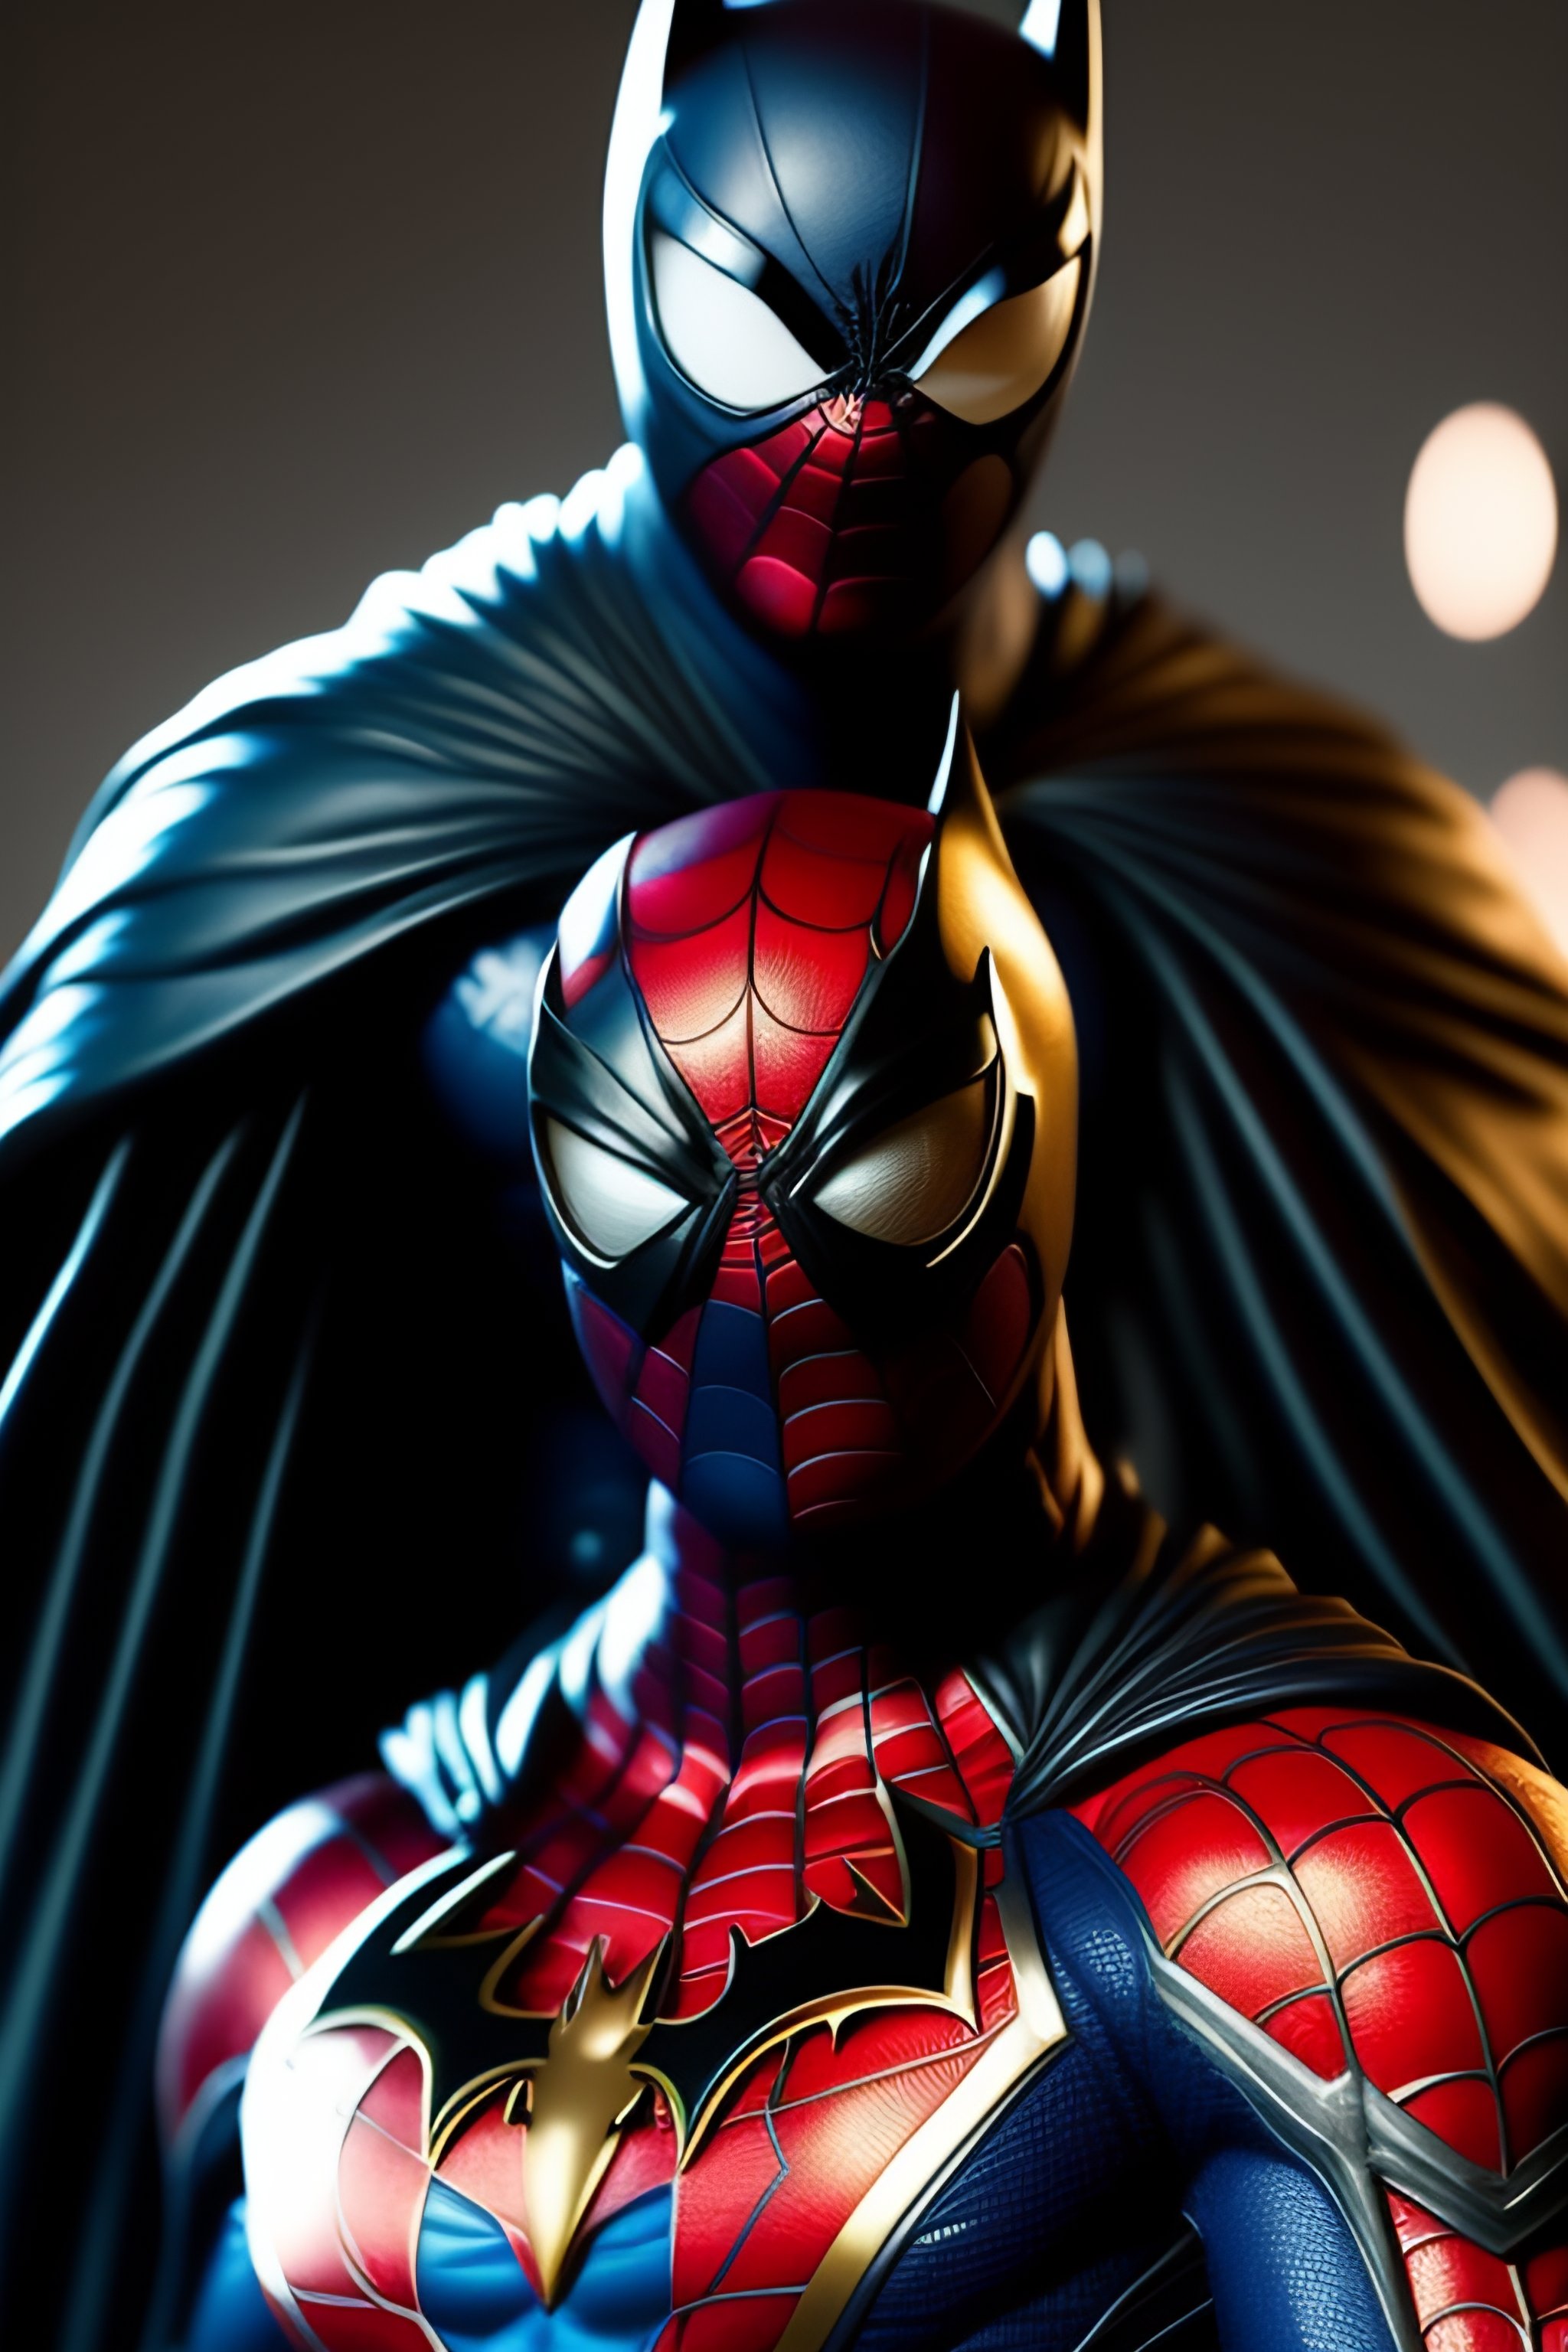 Lexica - Spider-man mixed with Batman